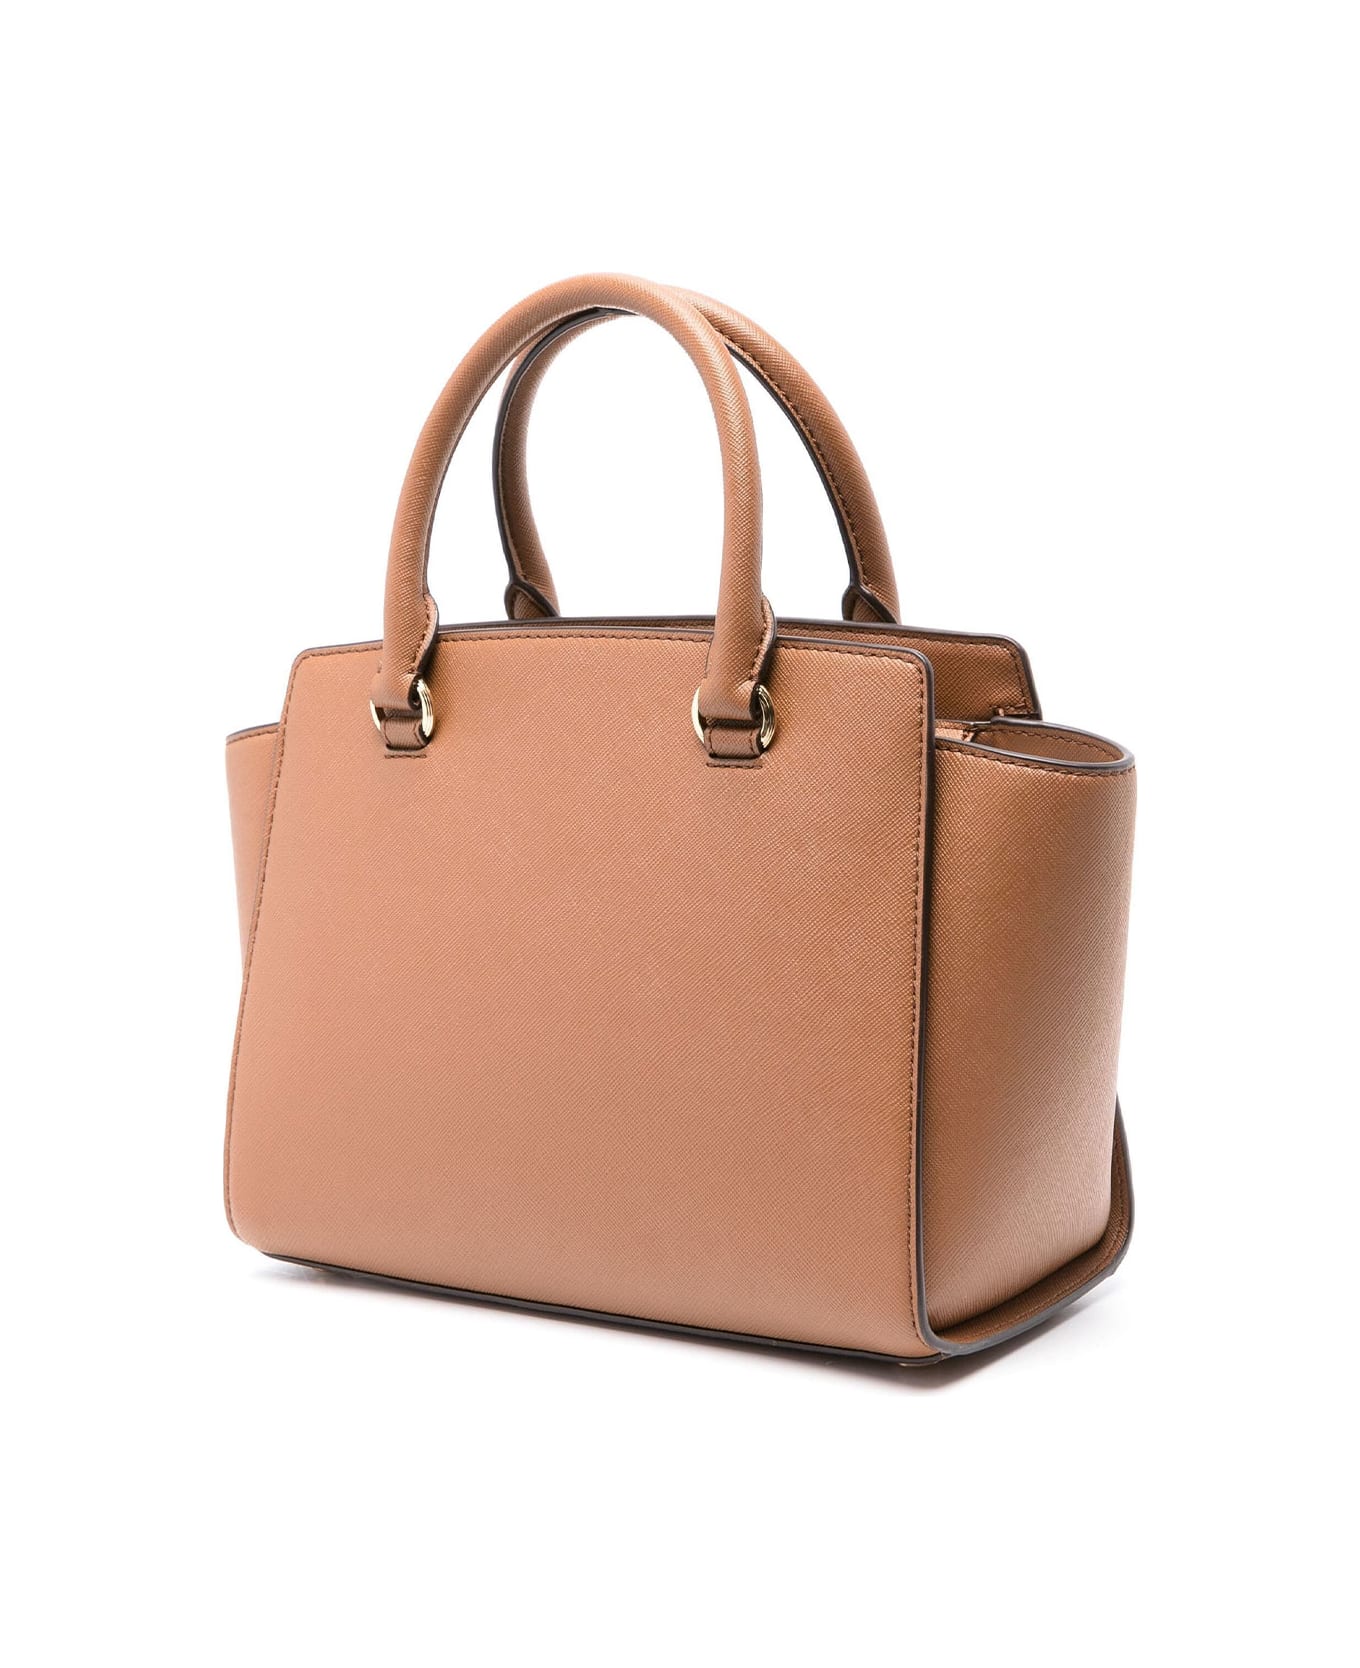 Michael Kors Saffiano Effect Handbag With Shoulder Strap - LUGGAGE